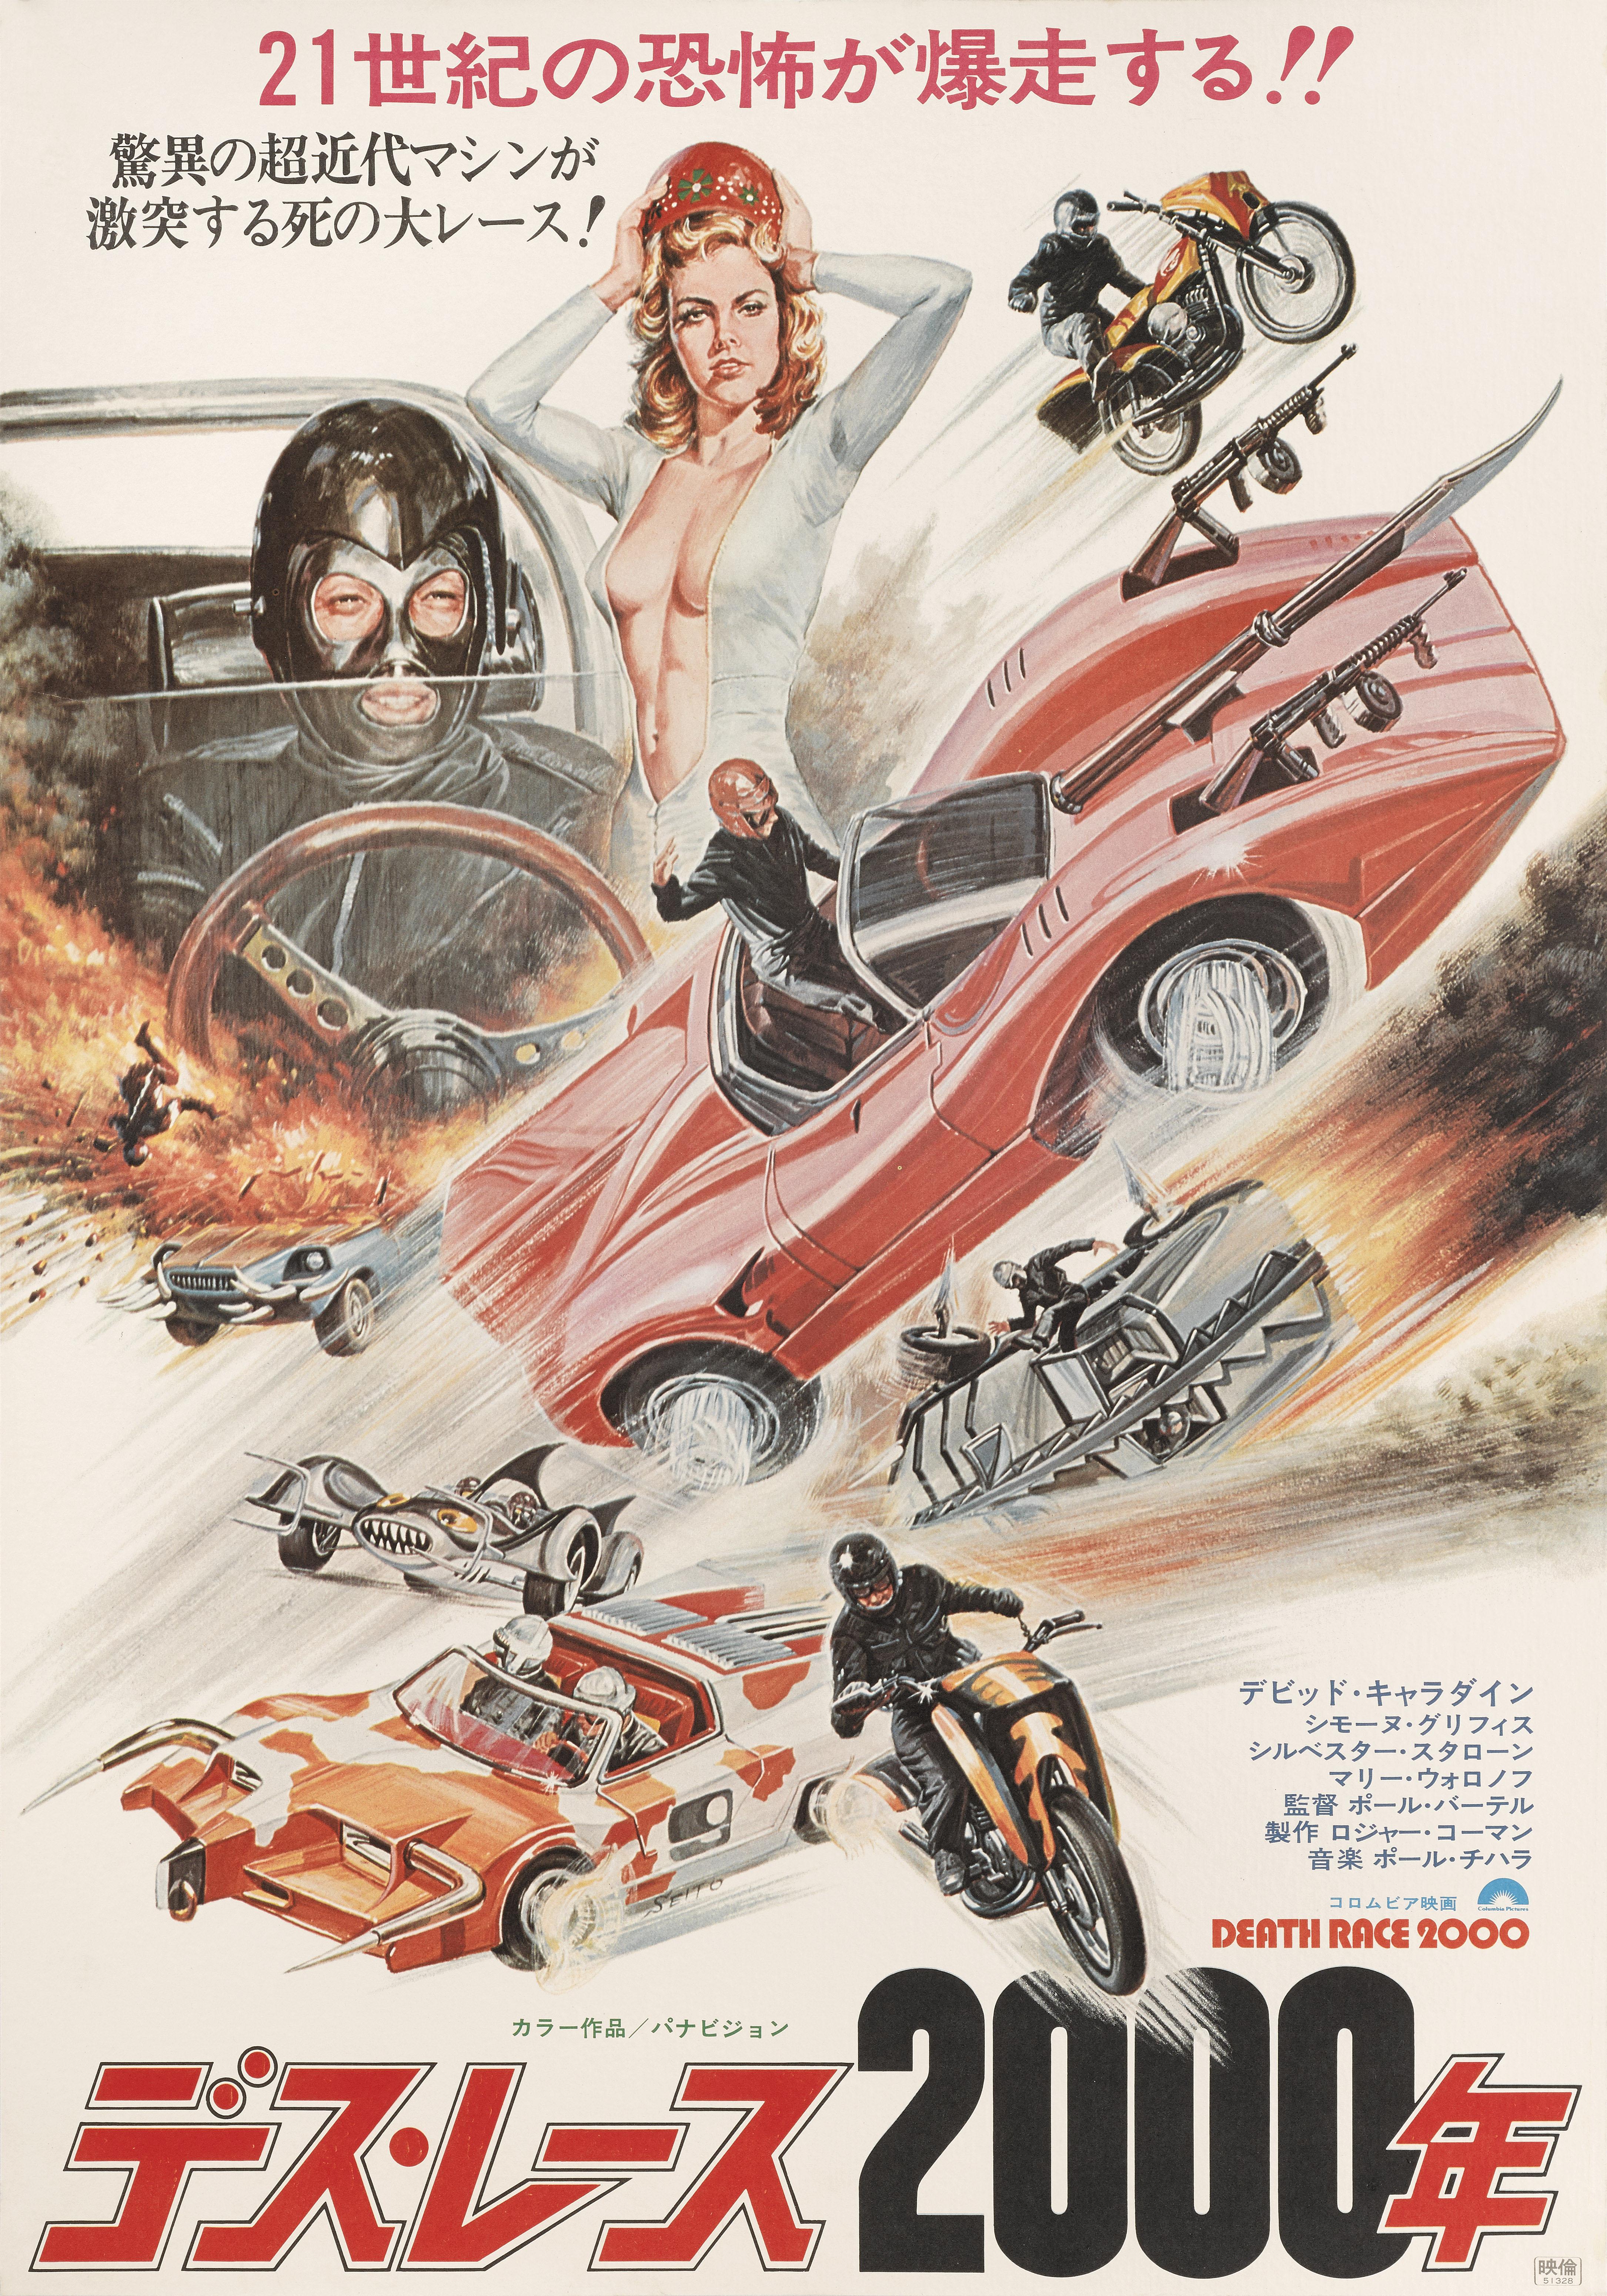 death race 2000 poster